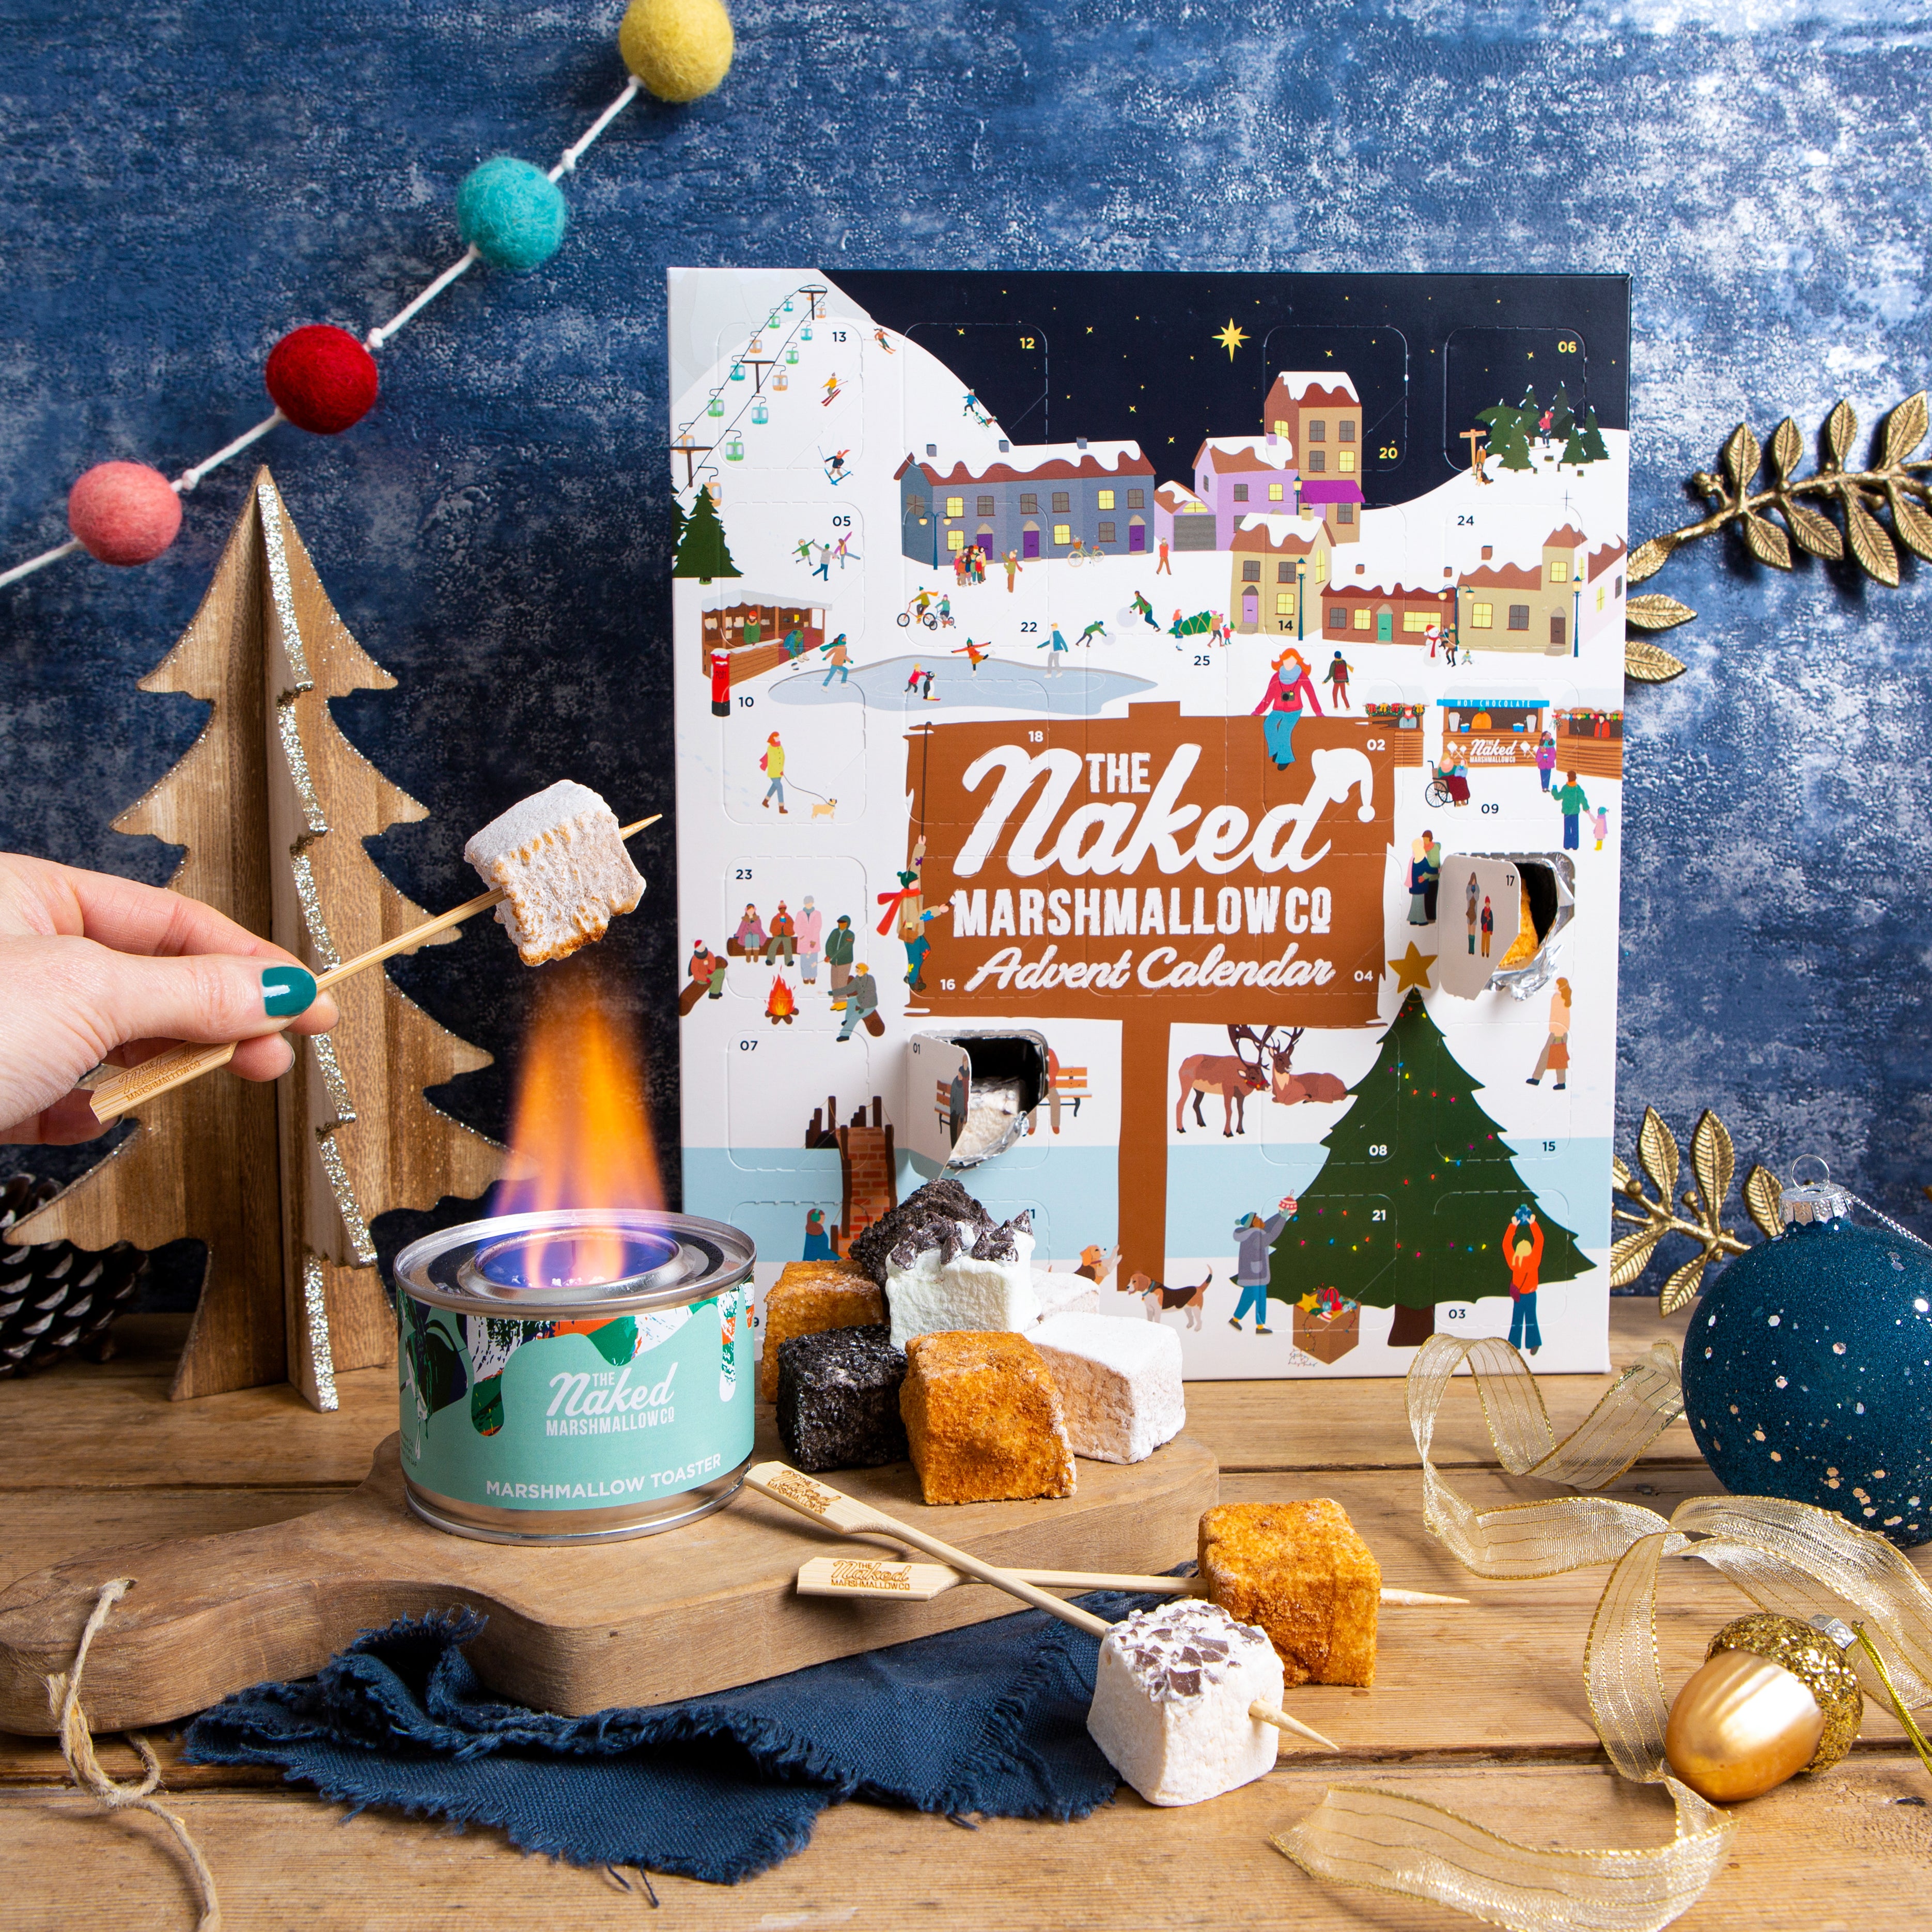 Gourmet Marshmallow Advent Calendar – The Naked Marshmallow Co